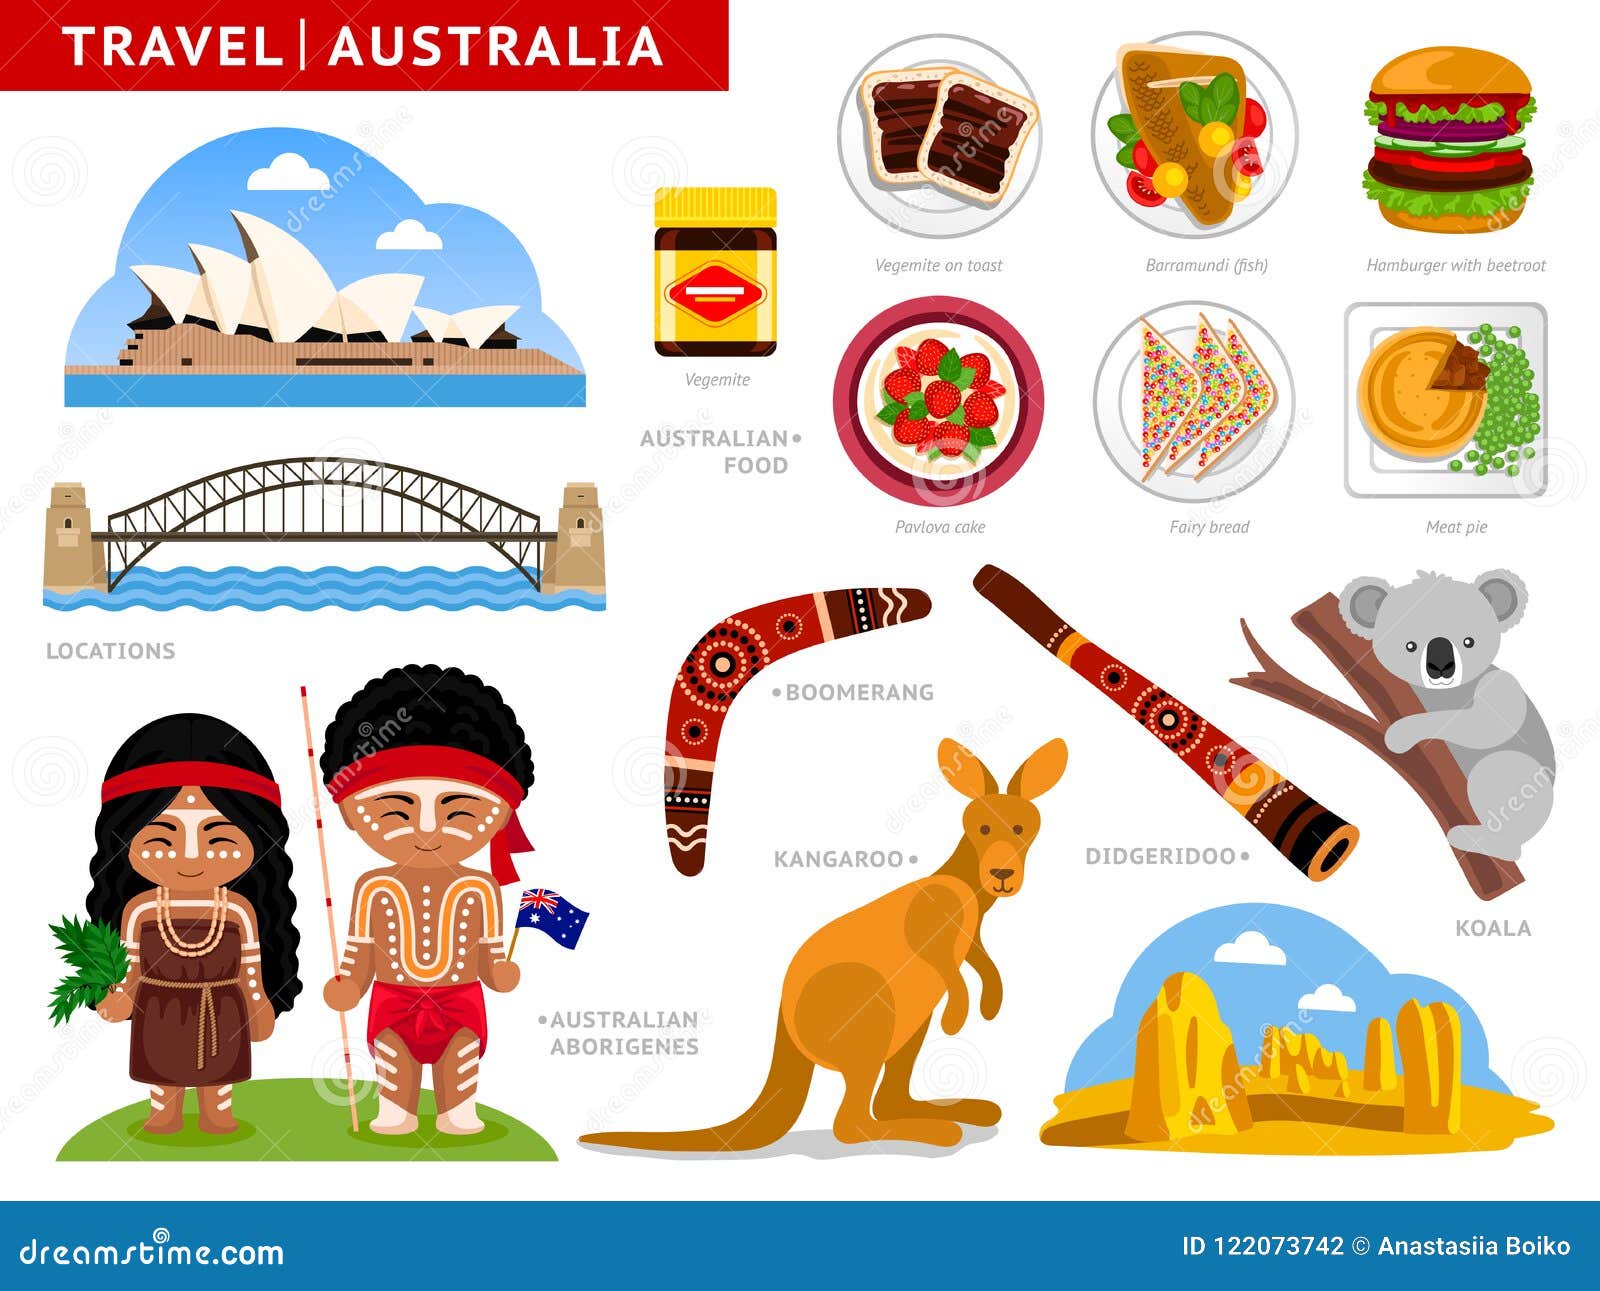 https://thumbs.dreamstime.com/z/travel-to-australia-australian-aborigines-national-clothes-set-traditional-cuisine-architecture-cultural-symbols-122073742.jpg